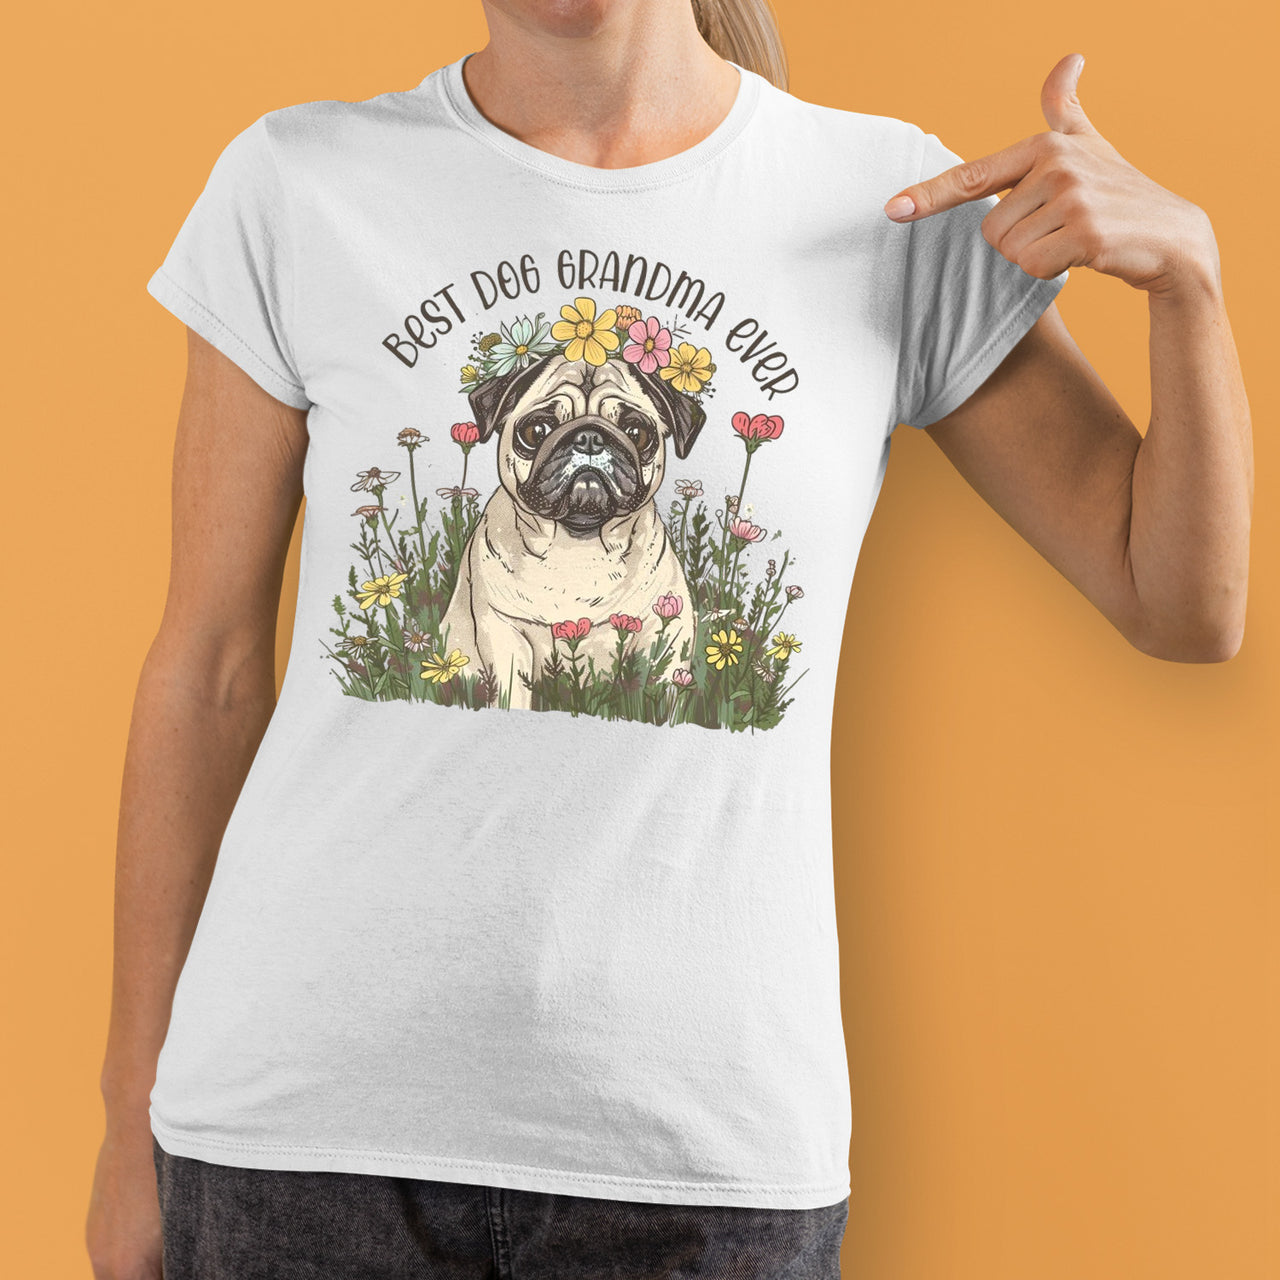 Pug Dog T-shirt, Pet Lover Shirt, Dog Lover Shirt, Best Dog Grandma Ever T-Shirt, Dog Owner Shirt, Gift For Dog Grandma, Funny Dog Shirts, Women Dog T-Shirt, Mother's Day Gift, Dog Lover Wife Gifts, Dog Shirt